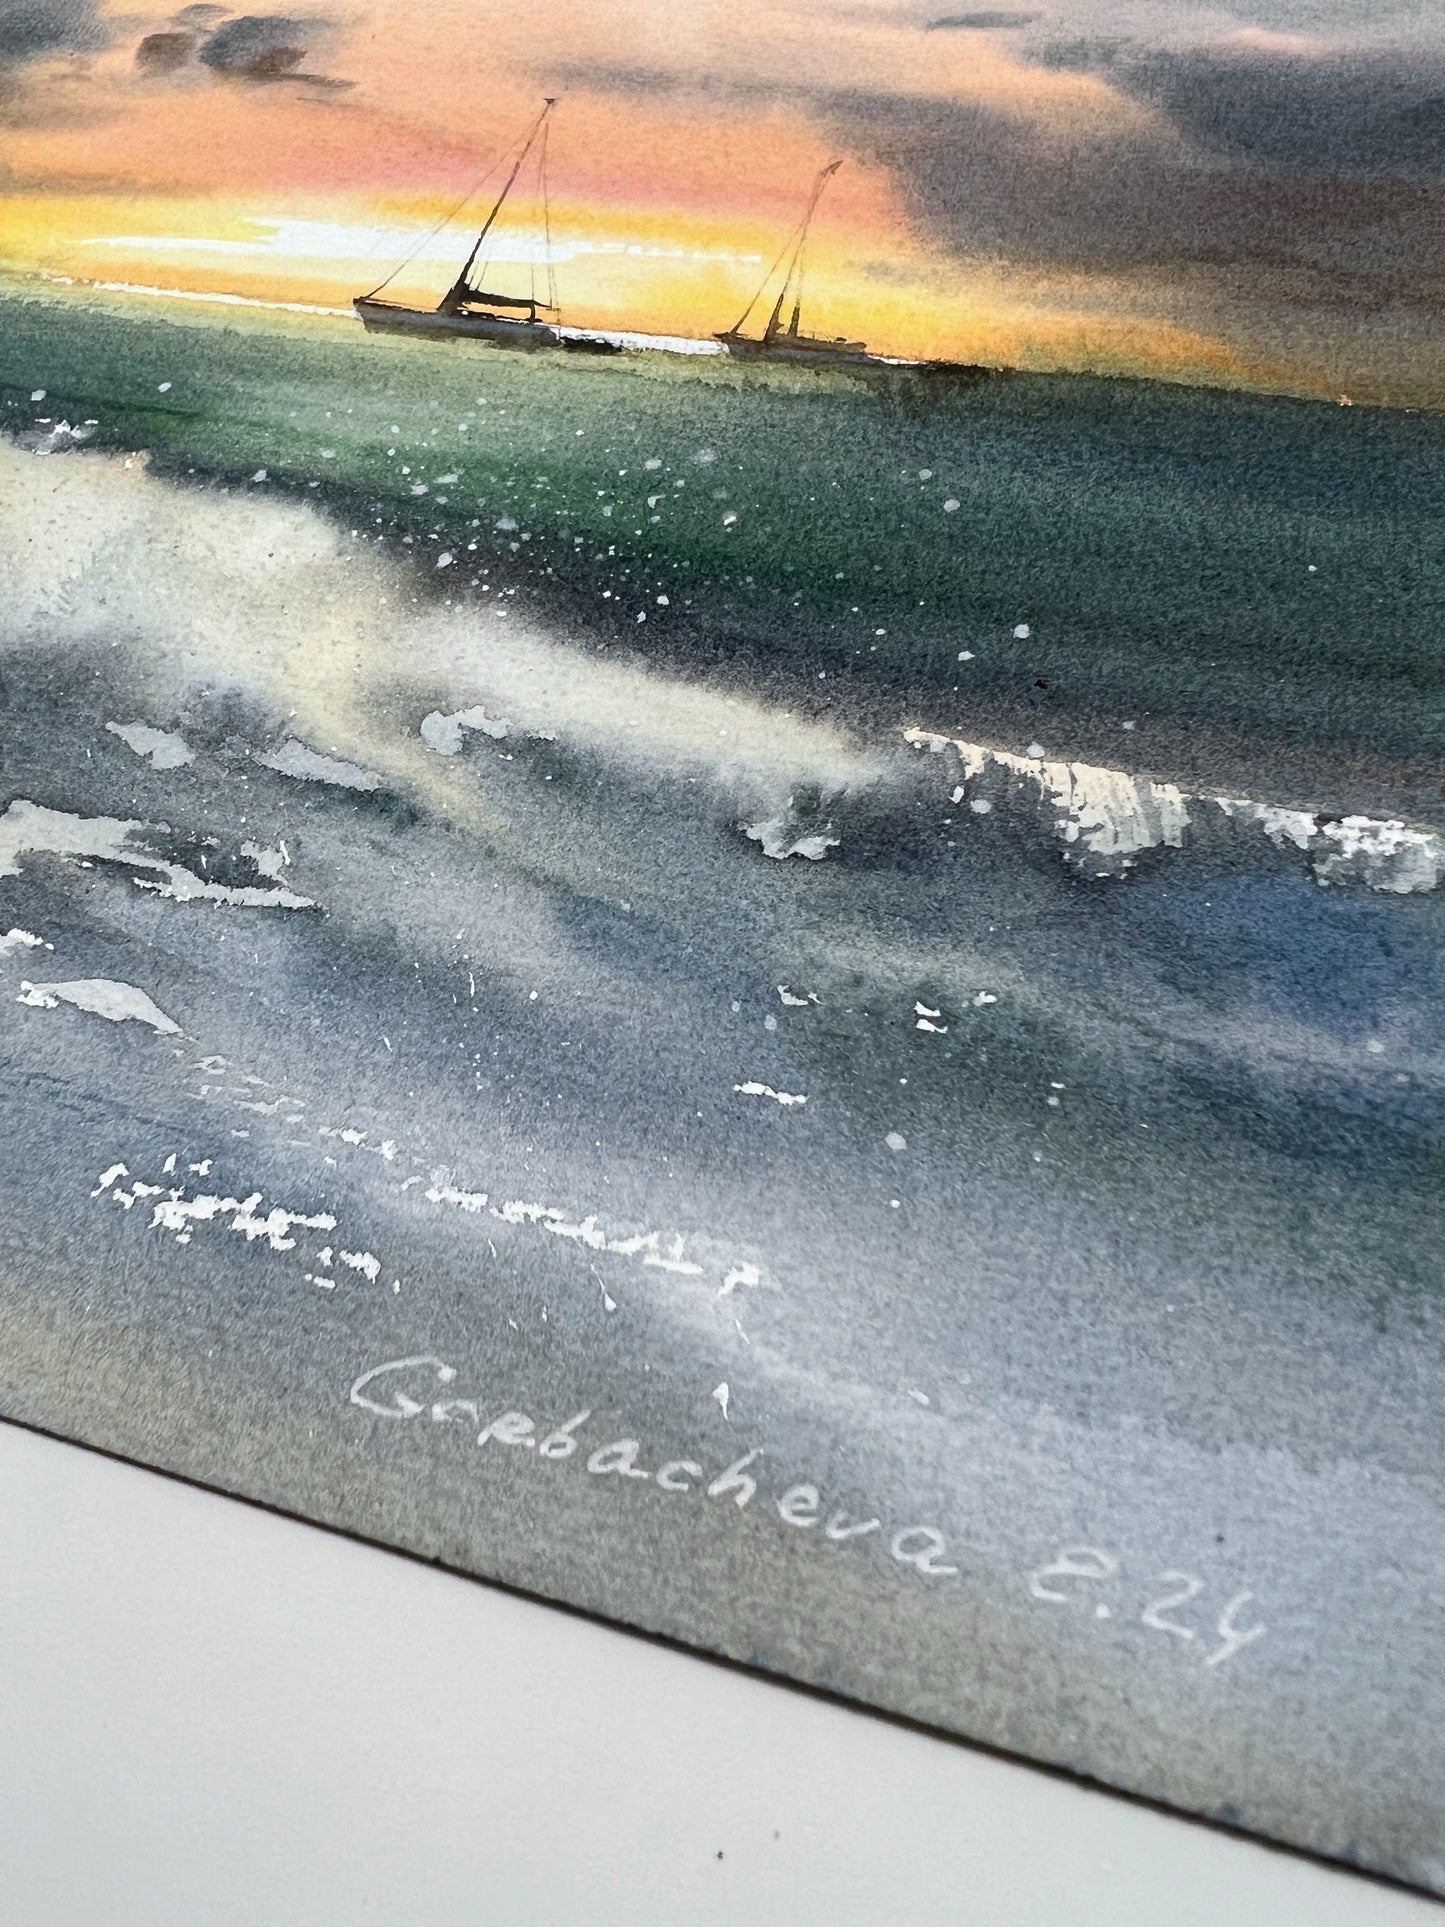 Original Seascape Painting 9x12 - "Yachts at Sunset #11" Watercolor, Nautical Wall Art, Perfect Housewarming Gift